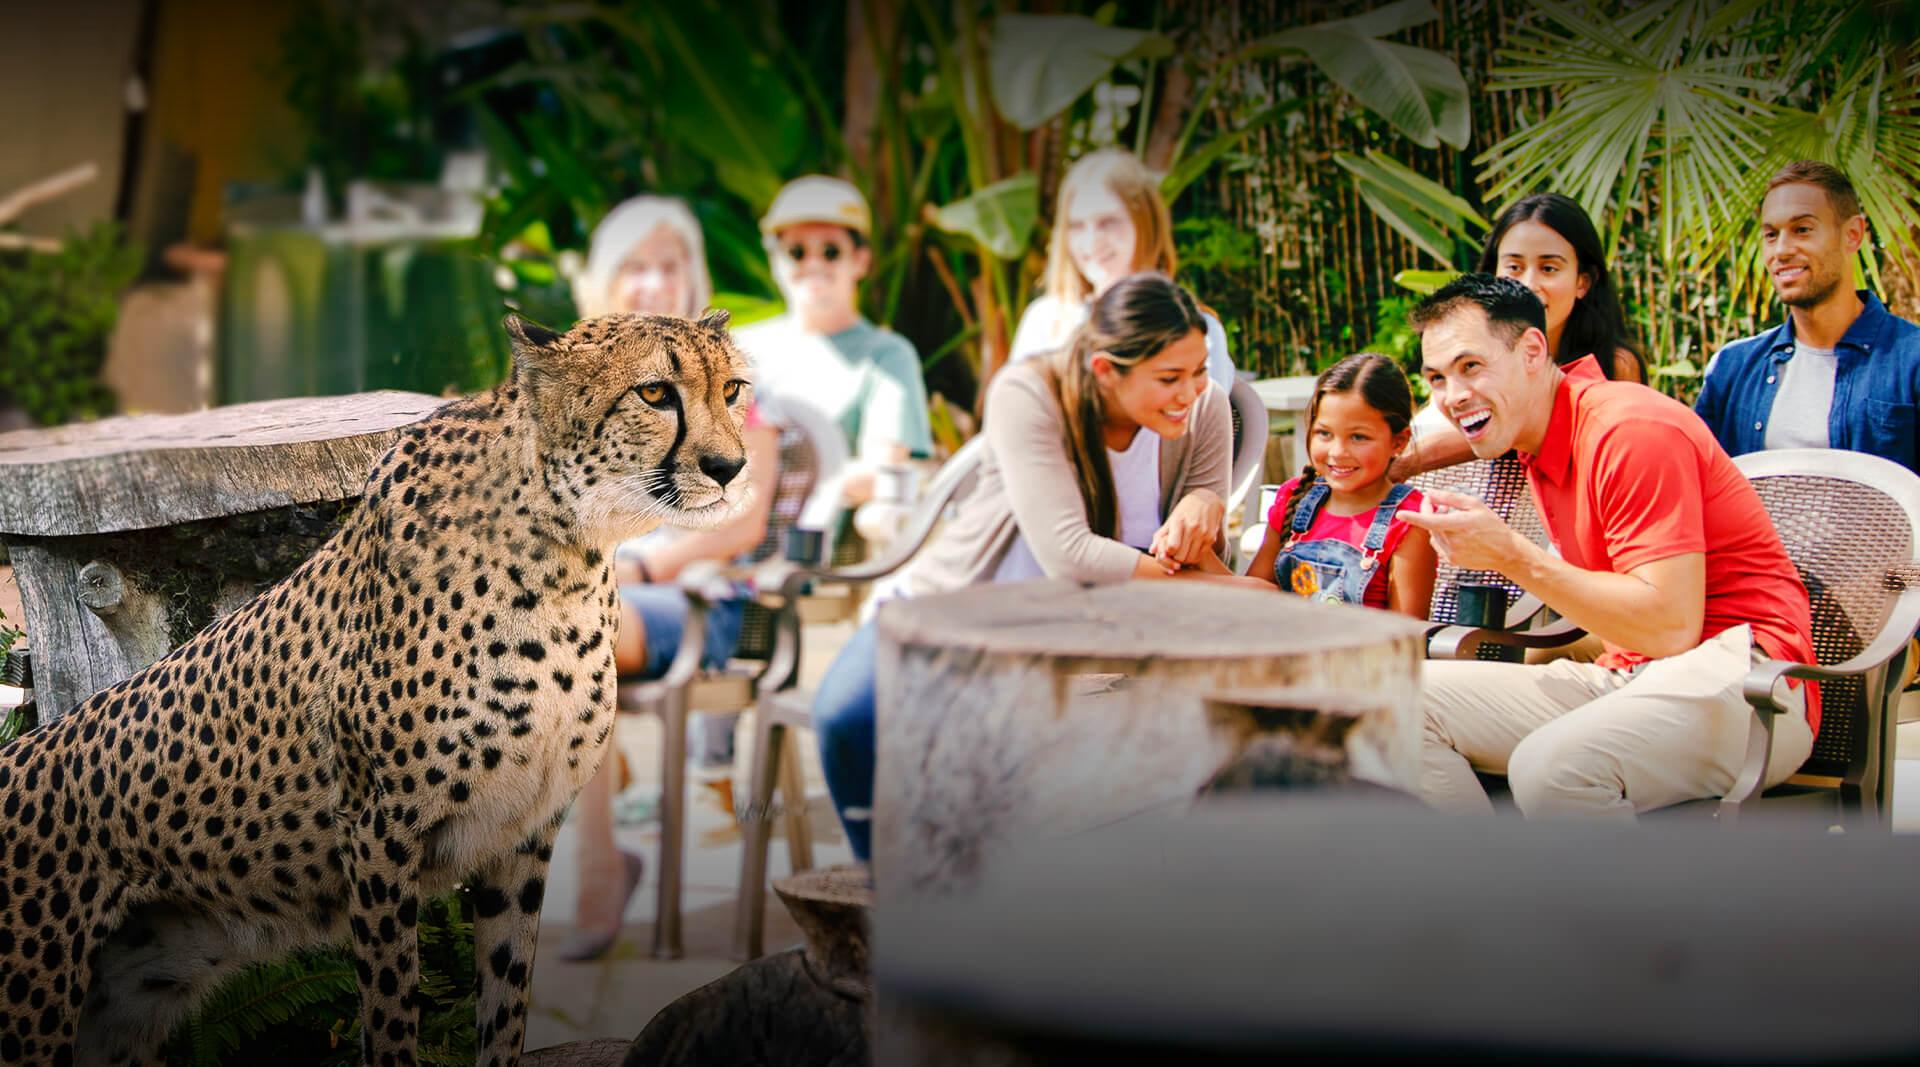 Wildlife presentation with a cheetah.